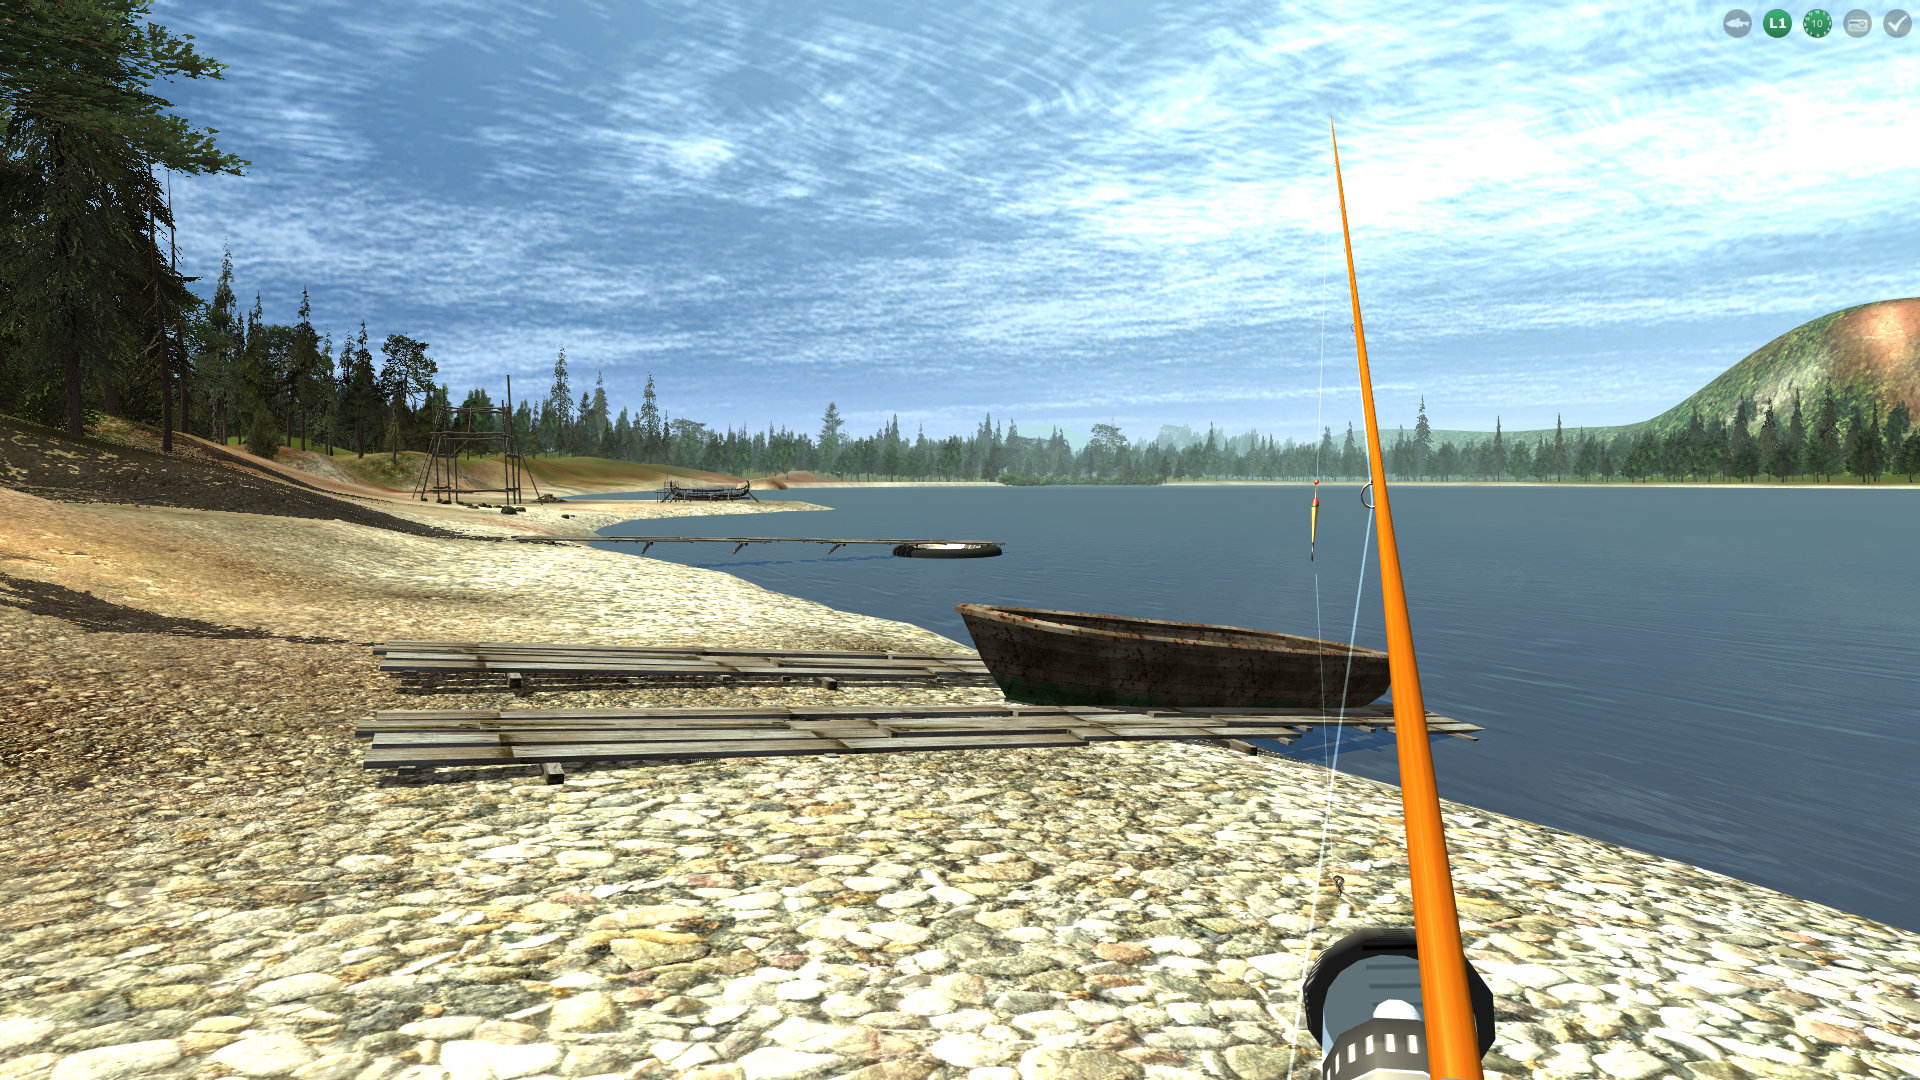 Worldwide Sports Fishing Free Download